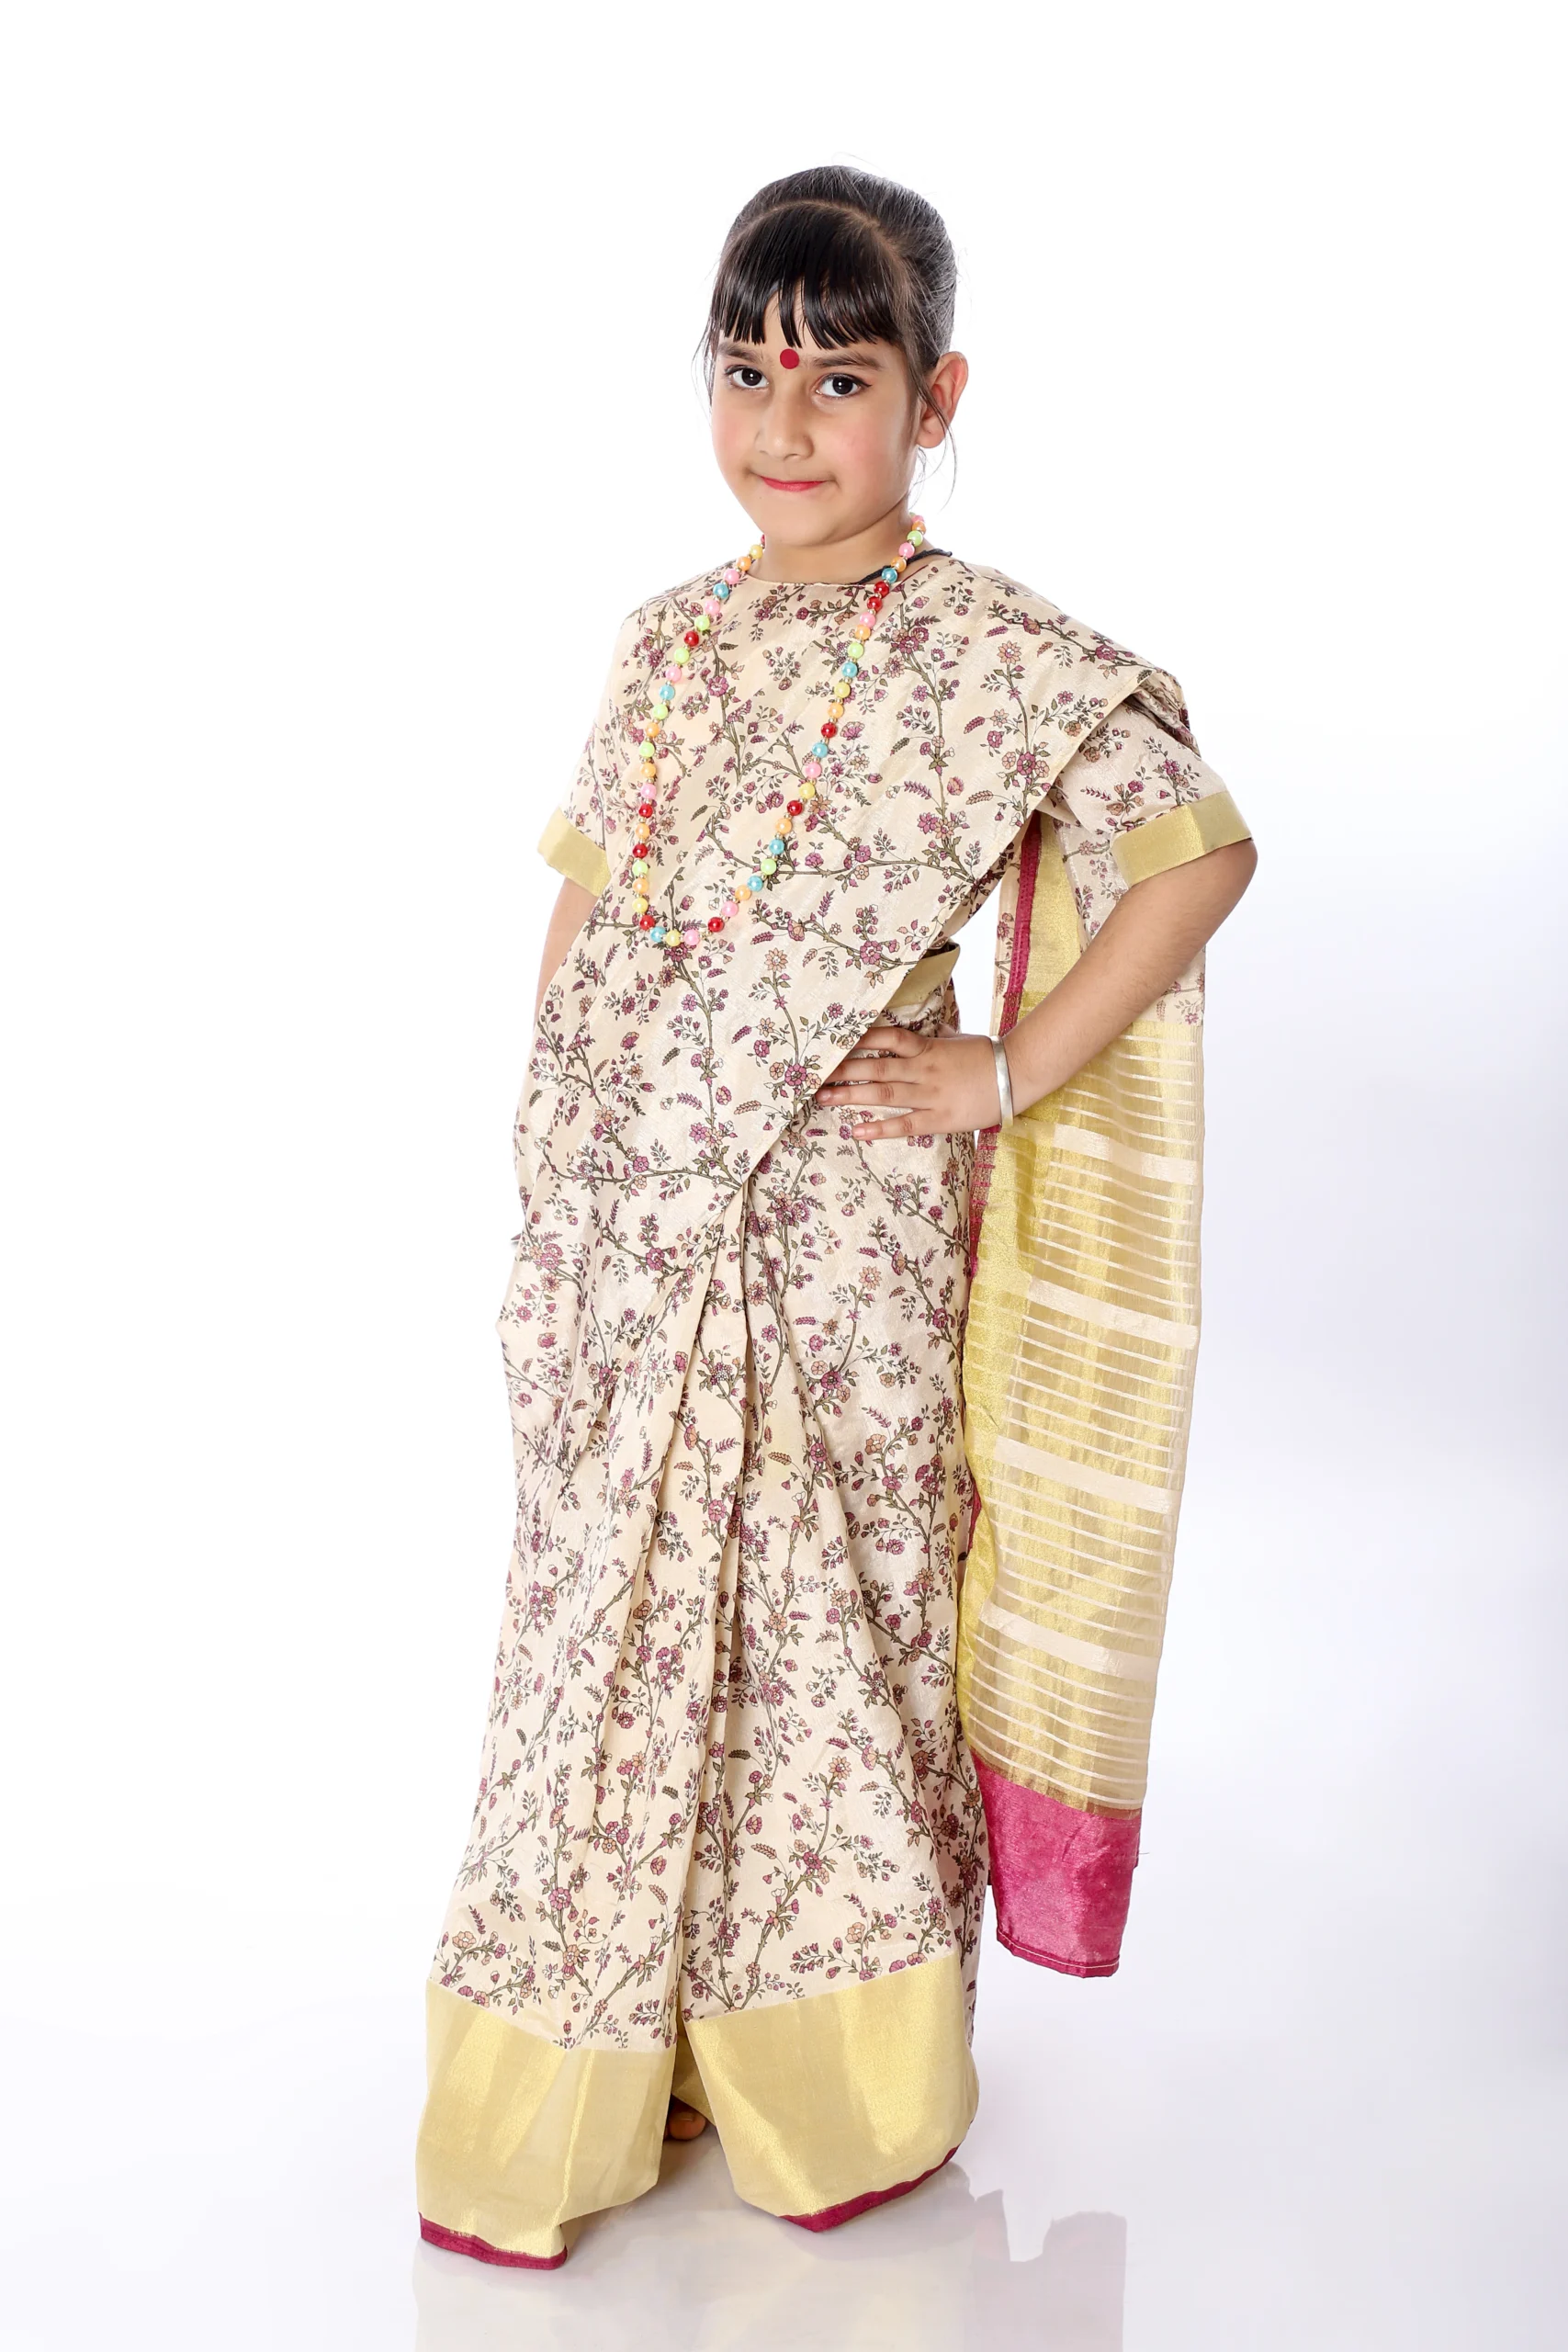 Girls cute in HAlf Sarees | Kids dress, Saree trends, Fancy dress costumes